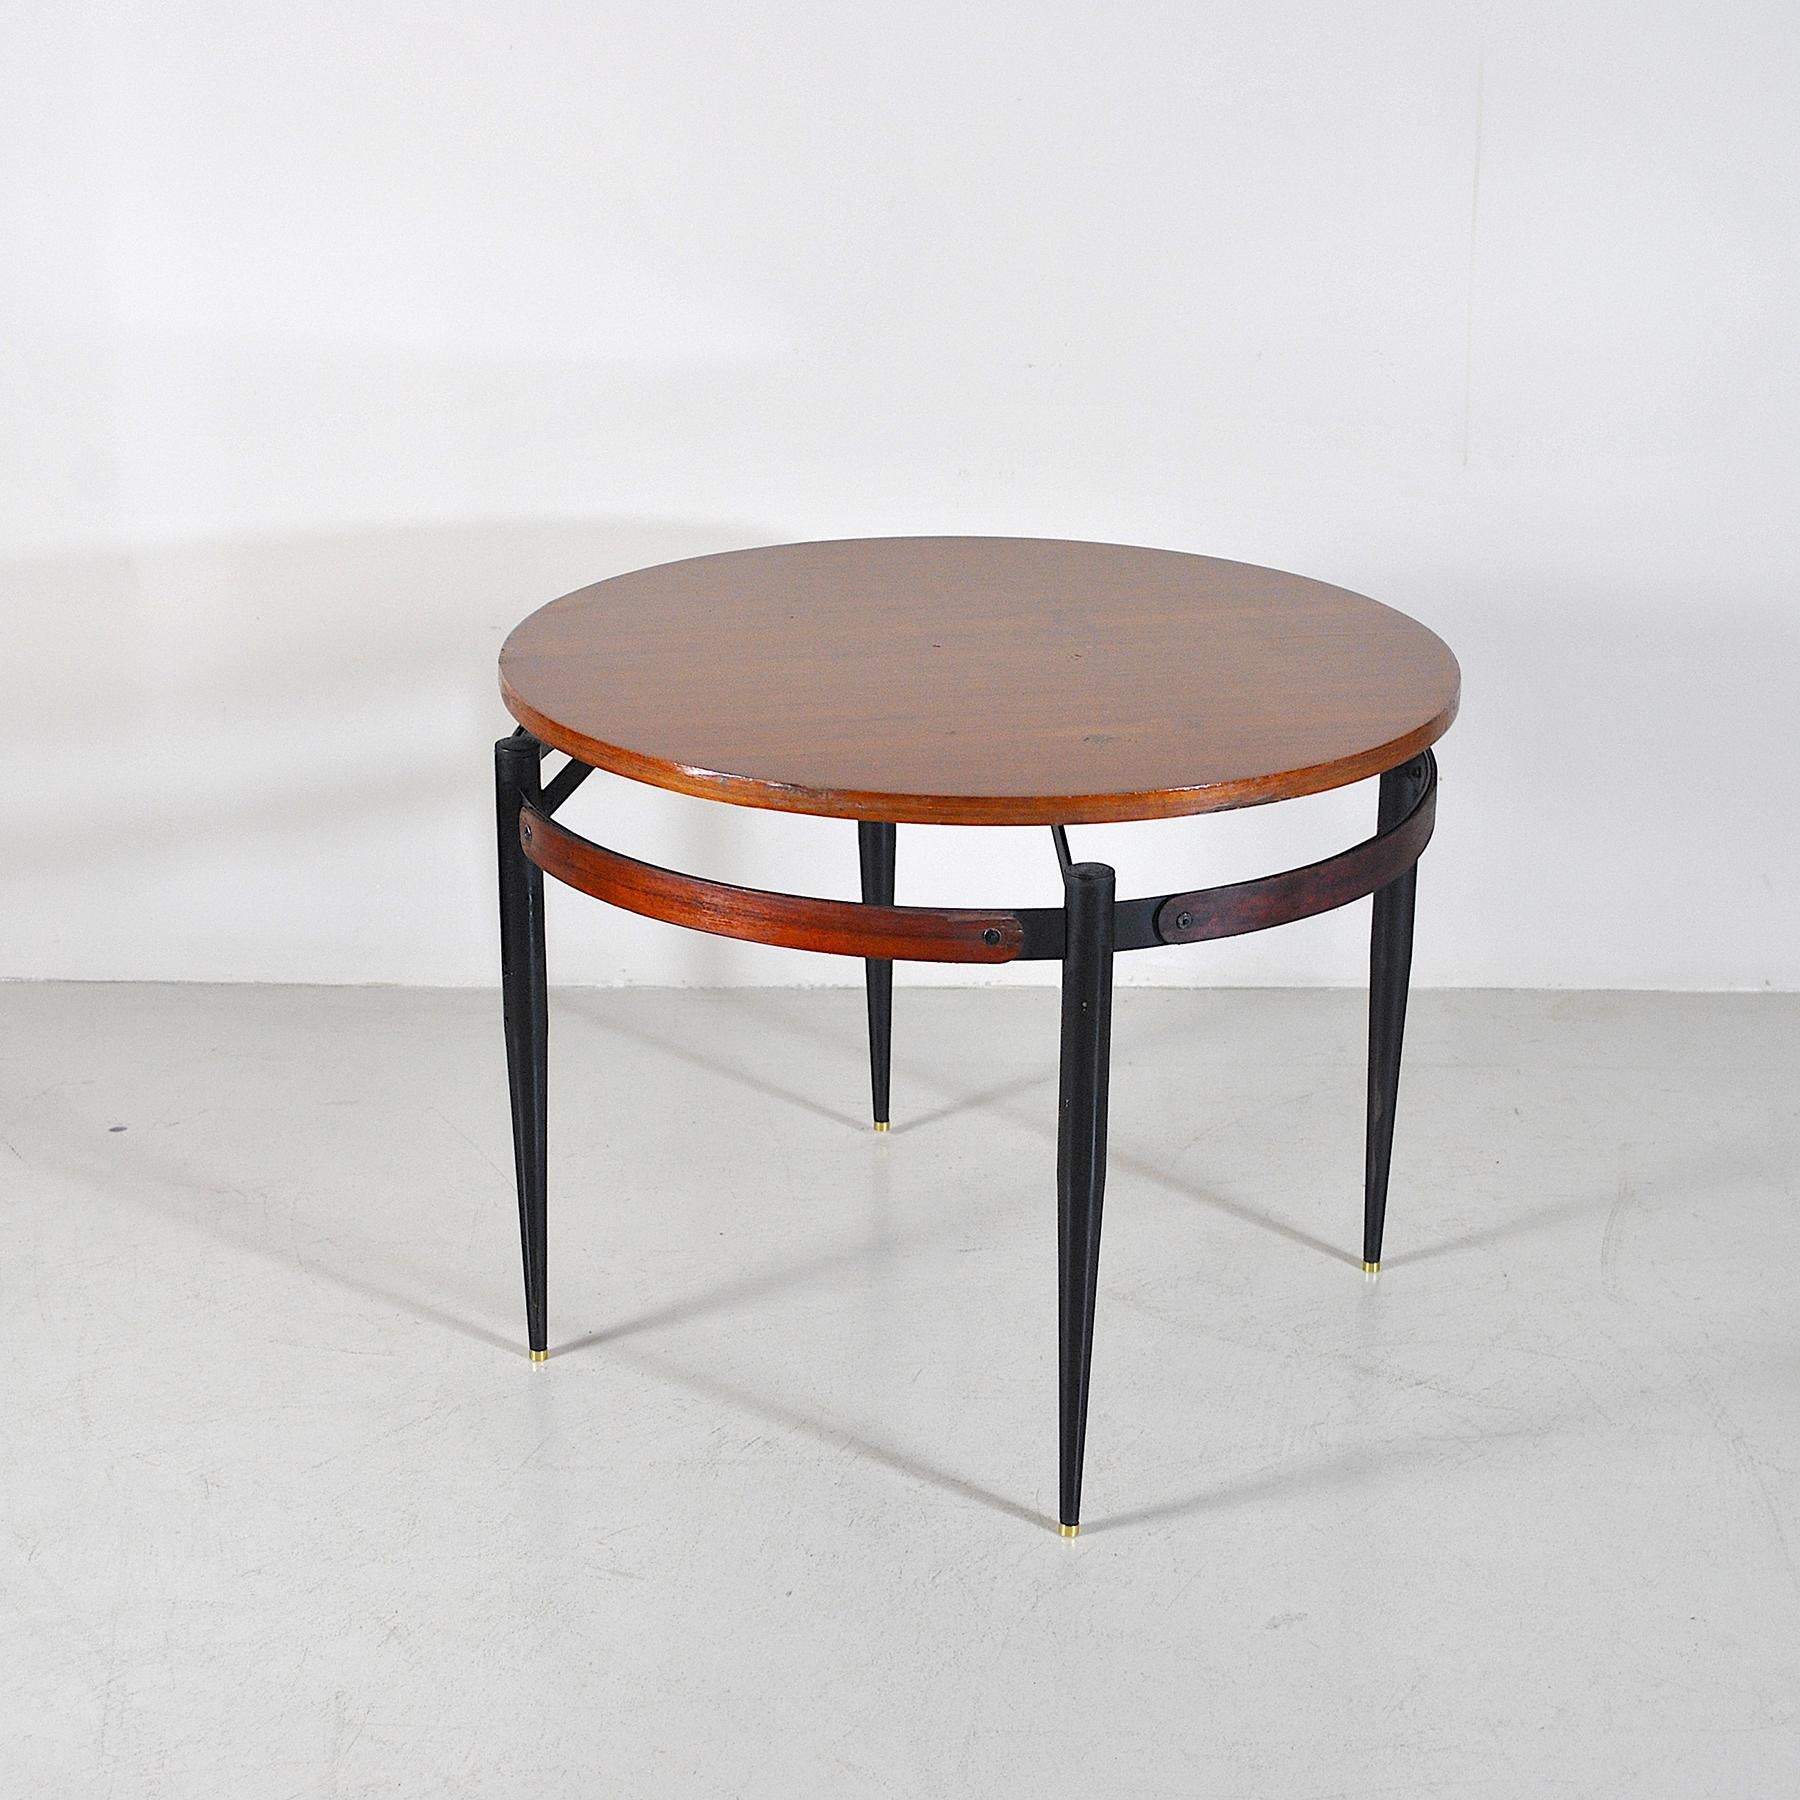 A circular coffee table an Italian mid-1960s by Silvio Cavatorta.